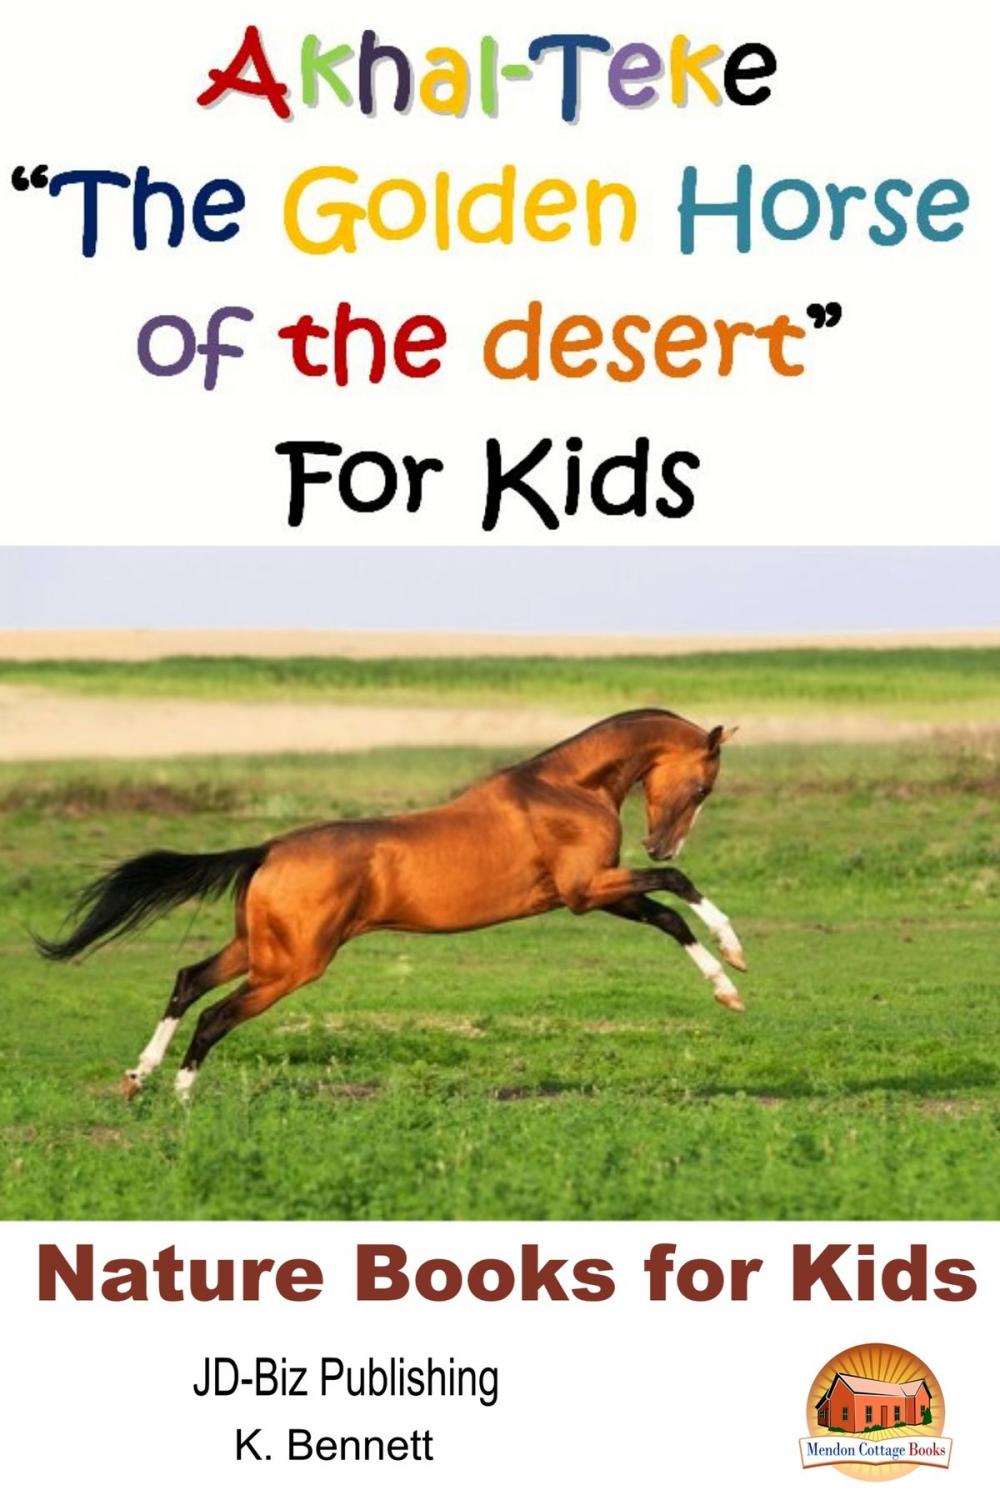 Big bigCover of Akhal-Teke "The Golden Horse of the desert" For Kids